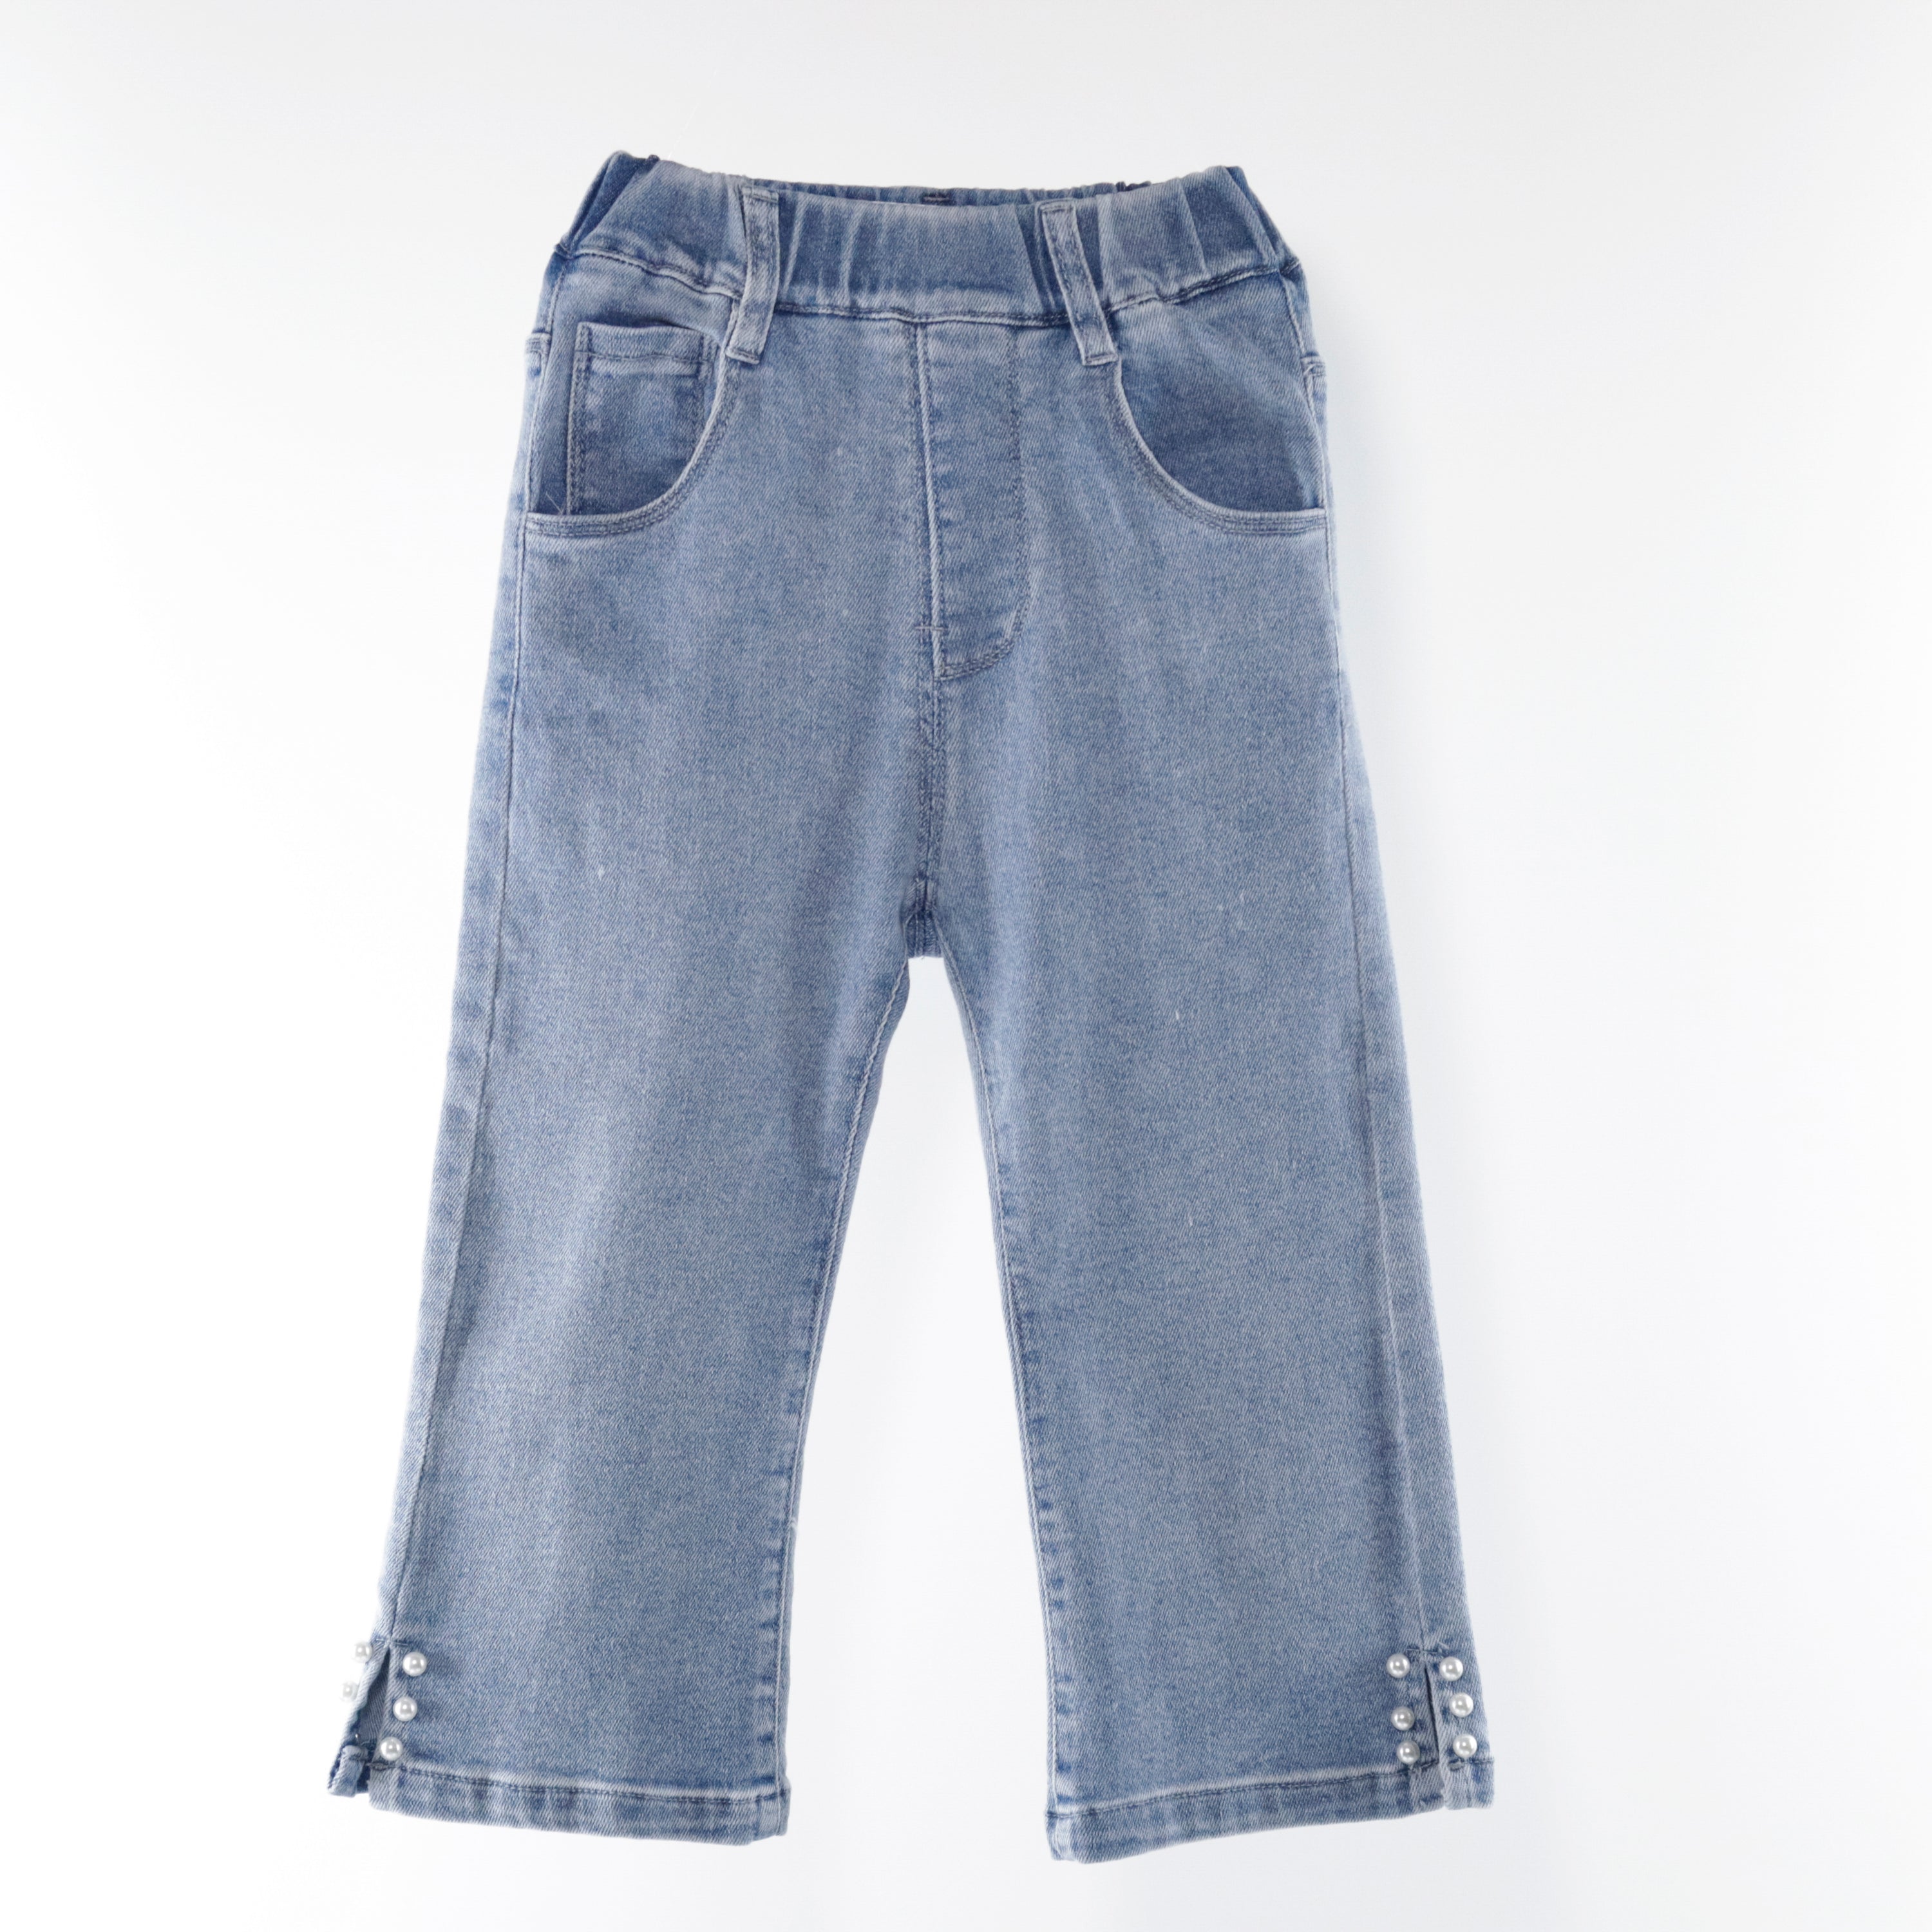 PH Flared Denim Jeans (Ready Stock)